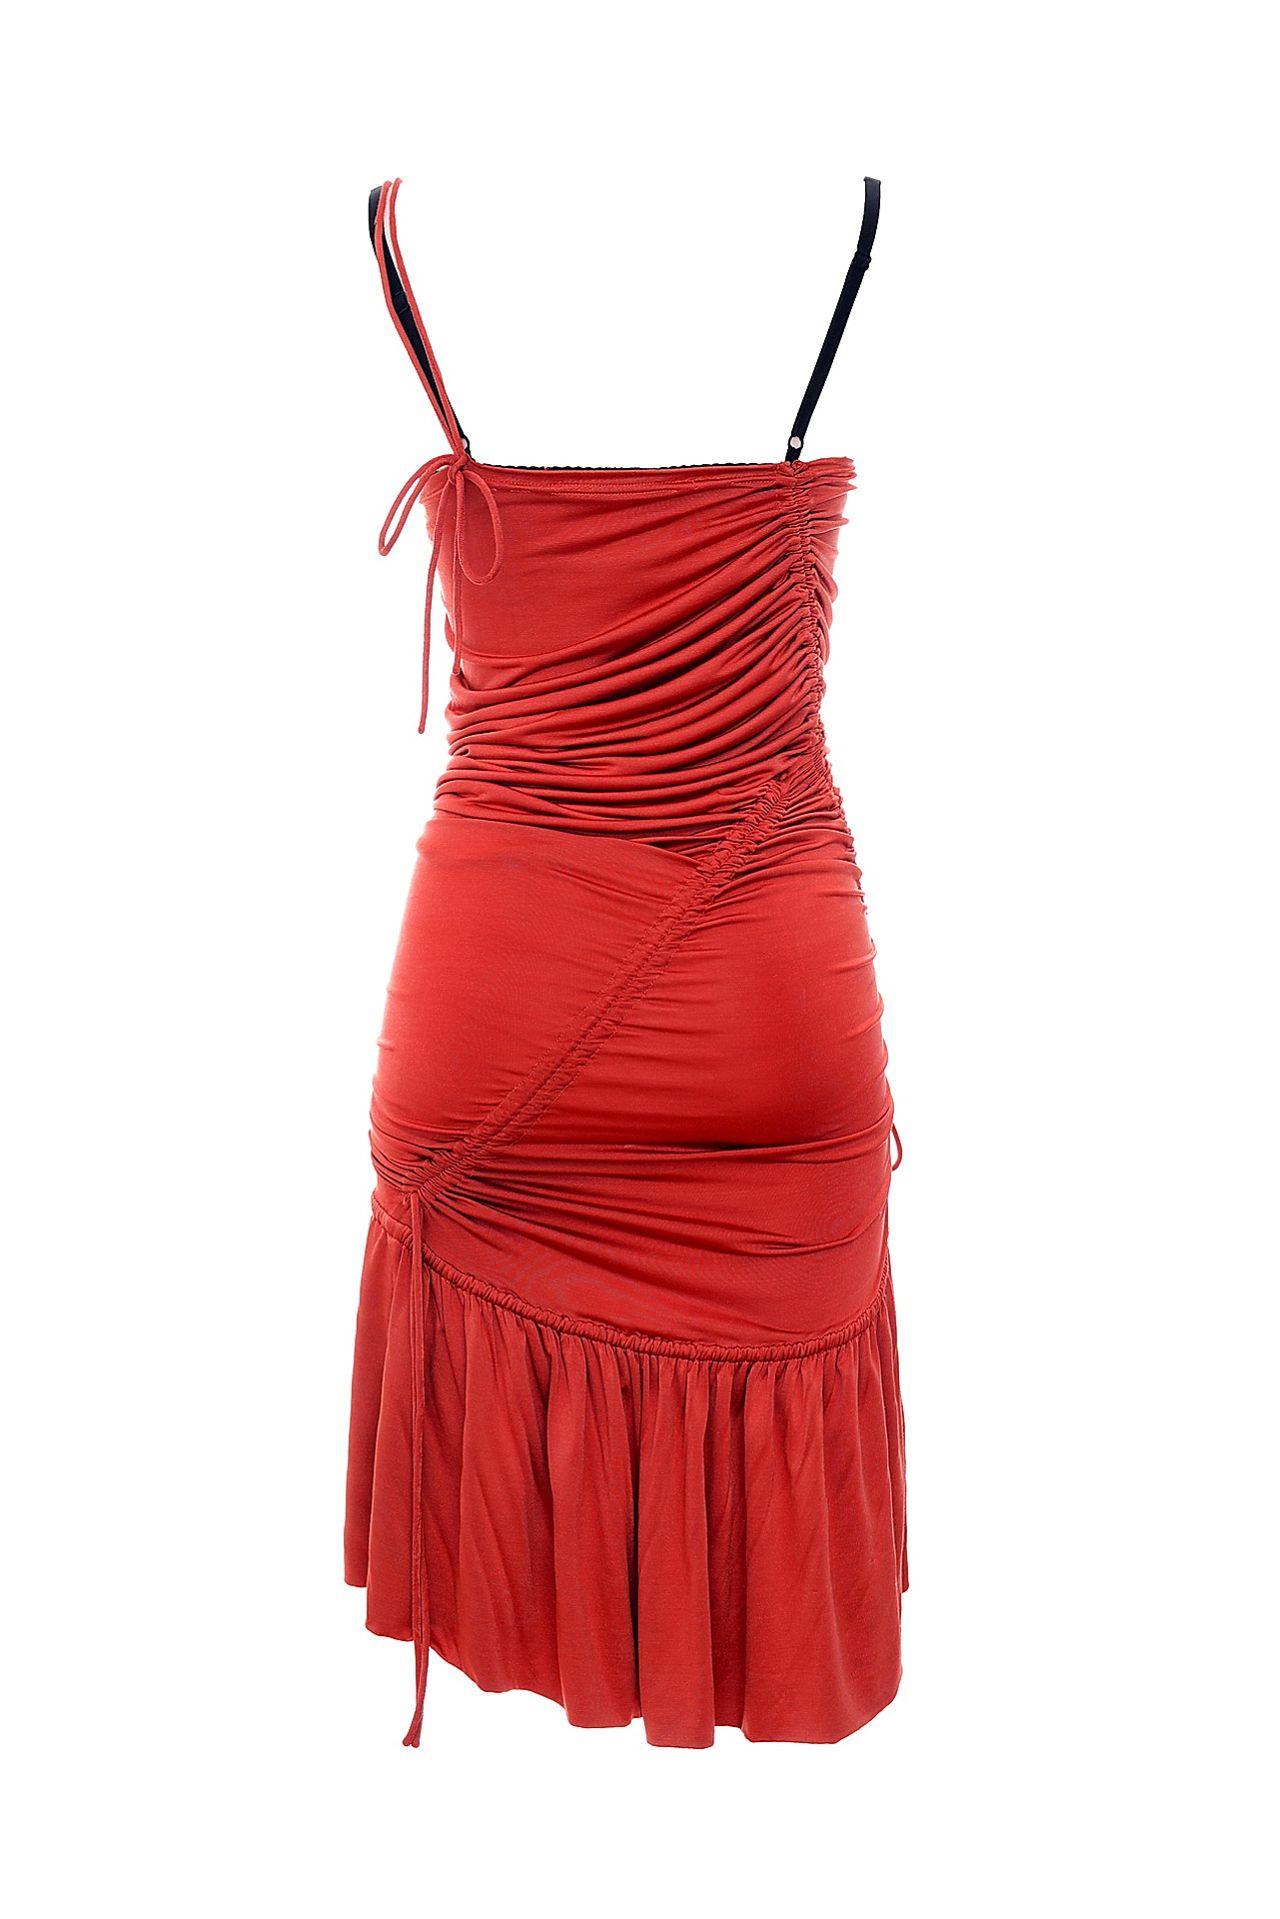 S/S 2003 Dolce & Gabbana 
Red Jersey Dress
